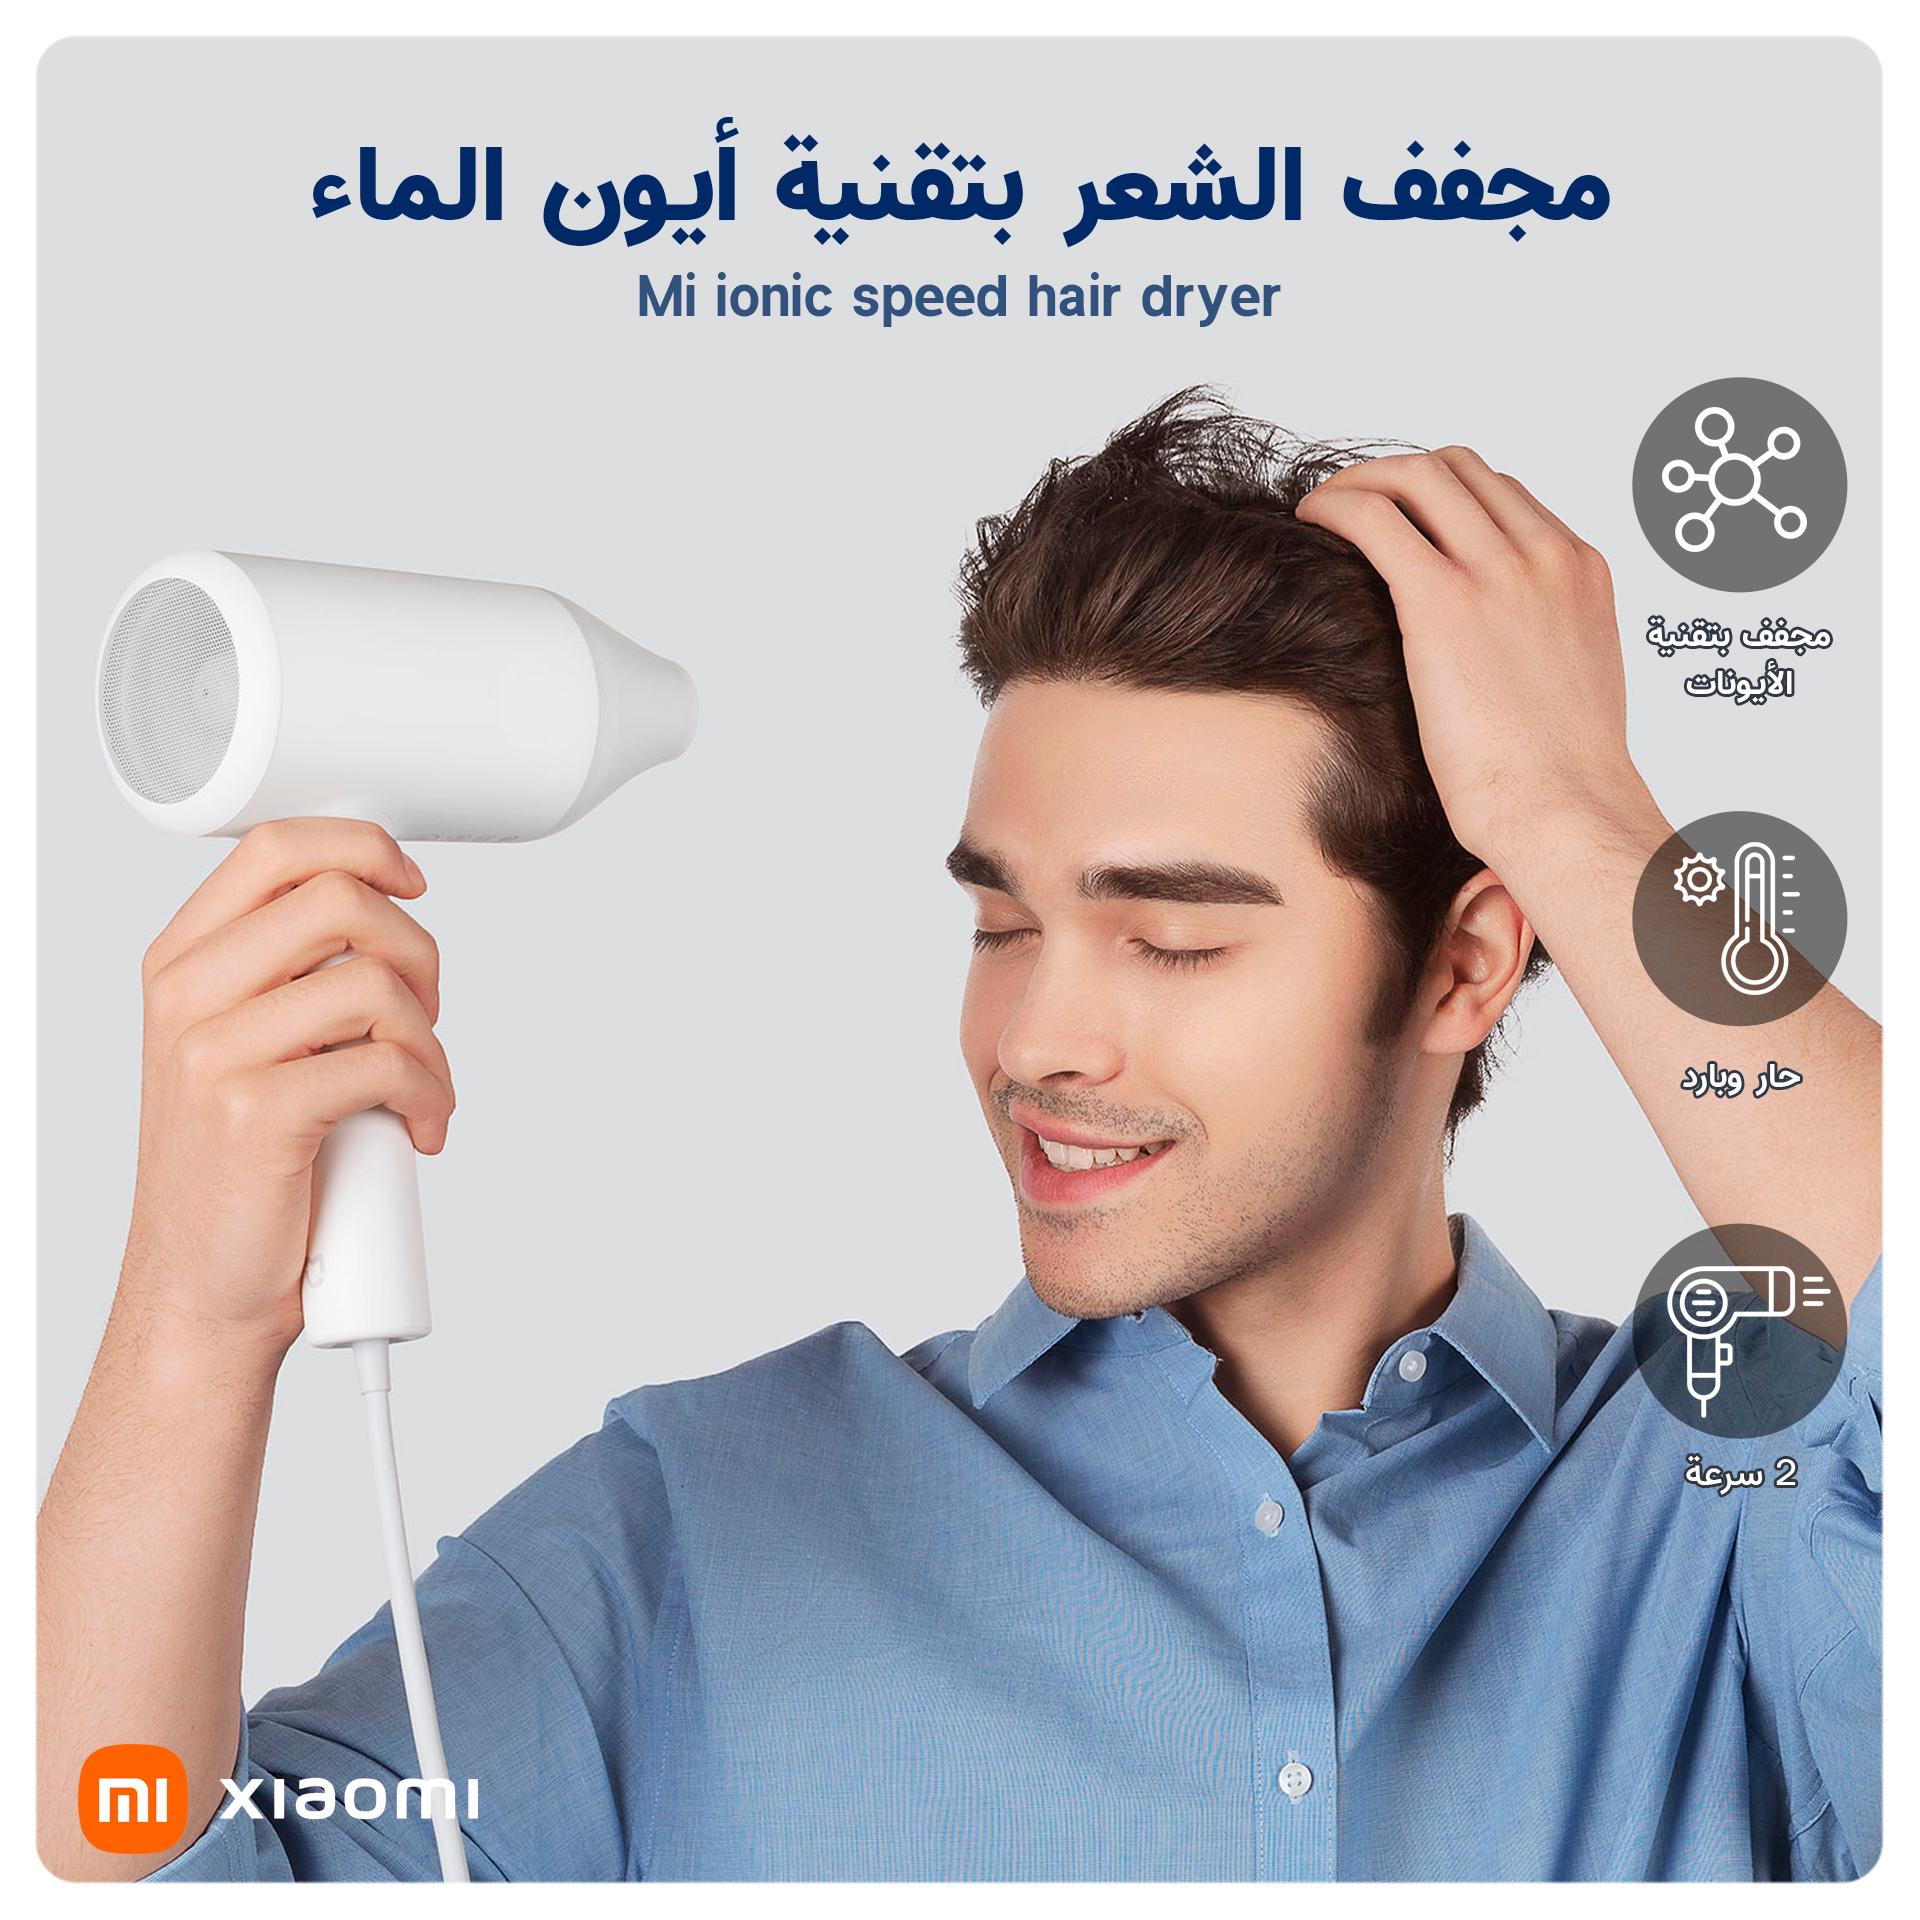 Xiaomi Mi ionic speed hair dryer